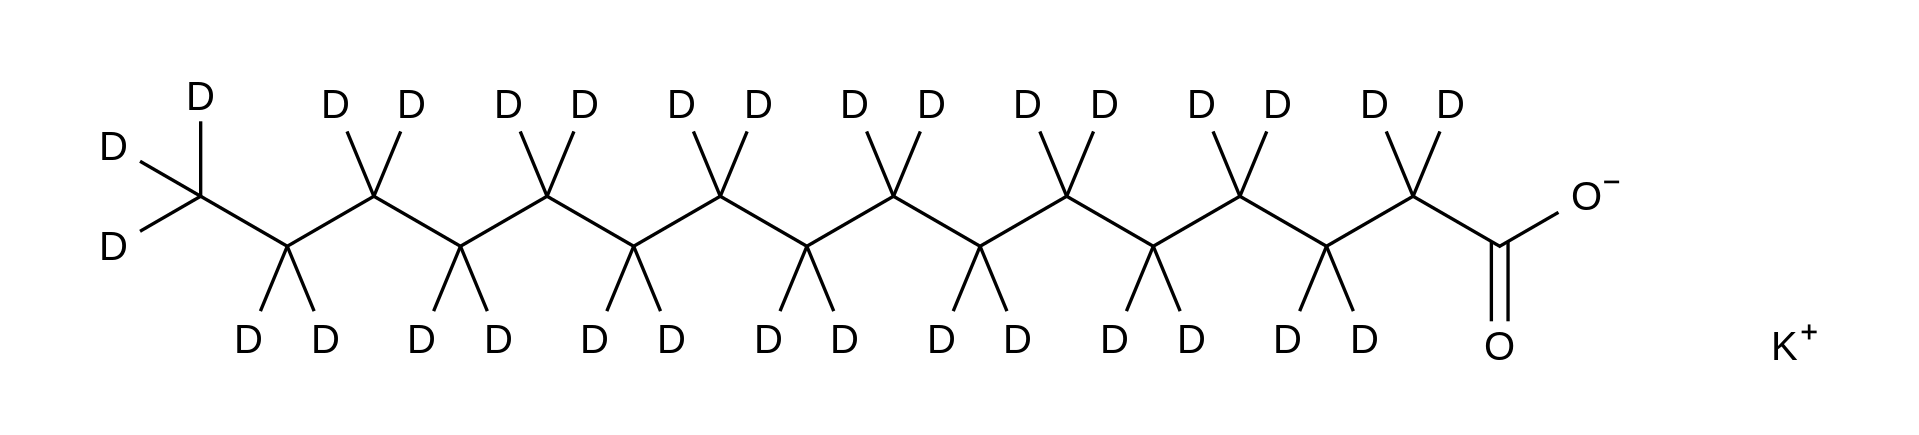 Potassium Hexadecanoate-d<sub>31</sub>